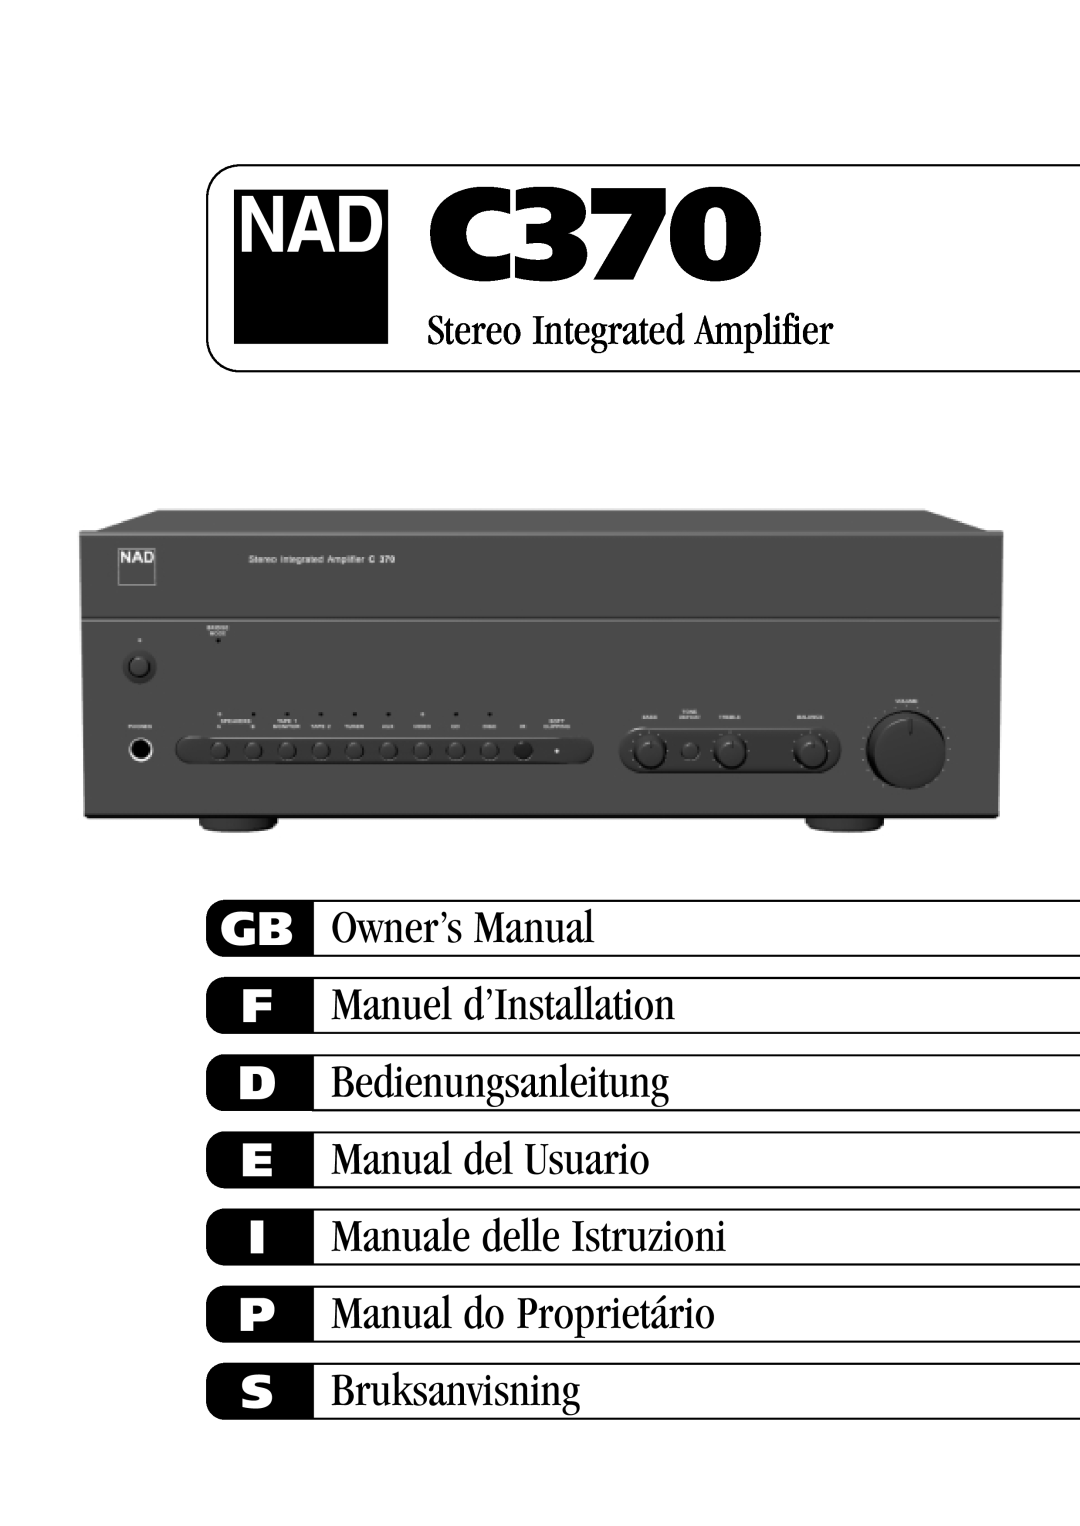 NAD C370 owner manual Gb F D E I P S, Bedienungsanleitung Manual del Usuario, Bruksanvisning, Stereo Integrated Amplifier 